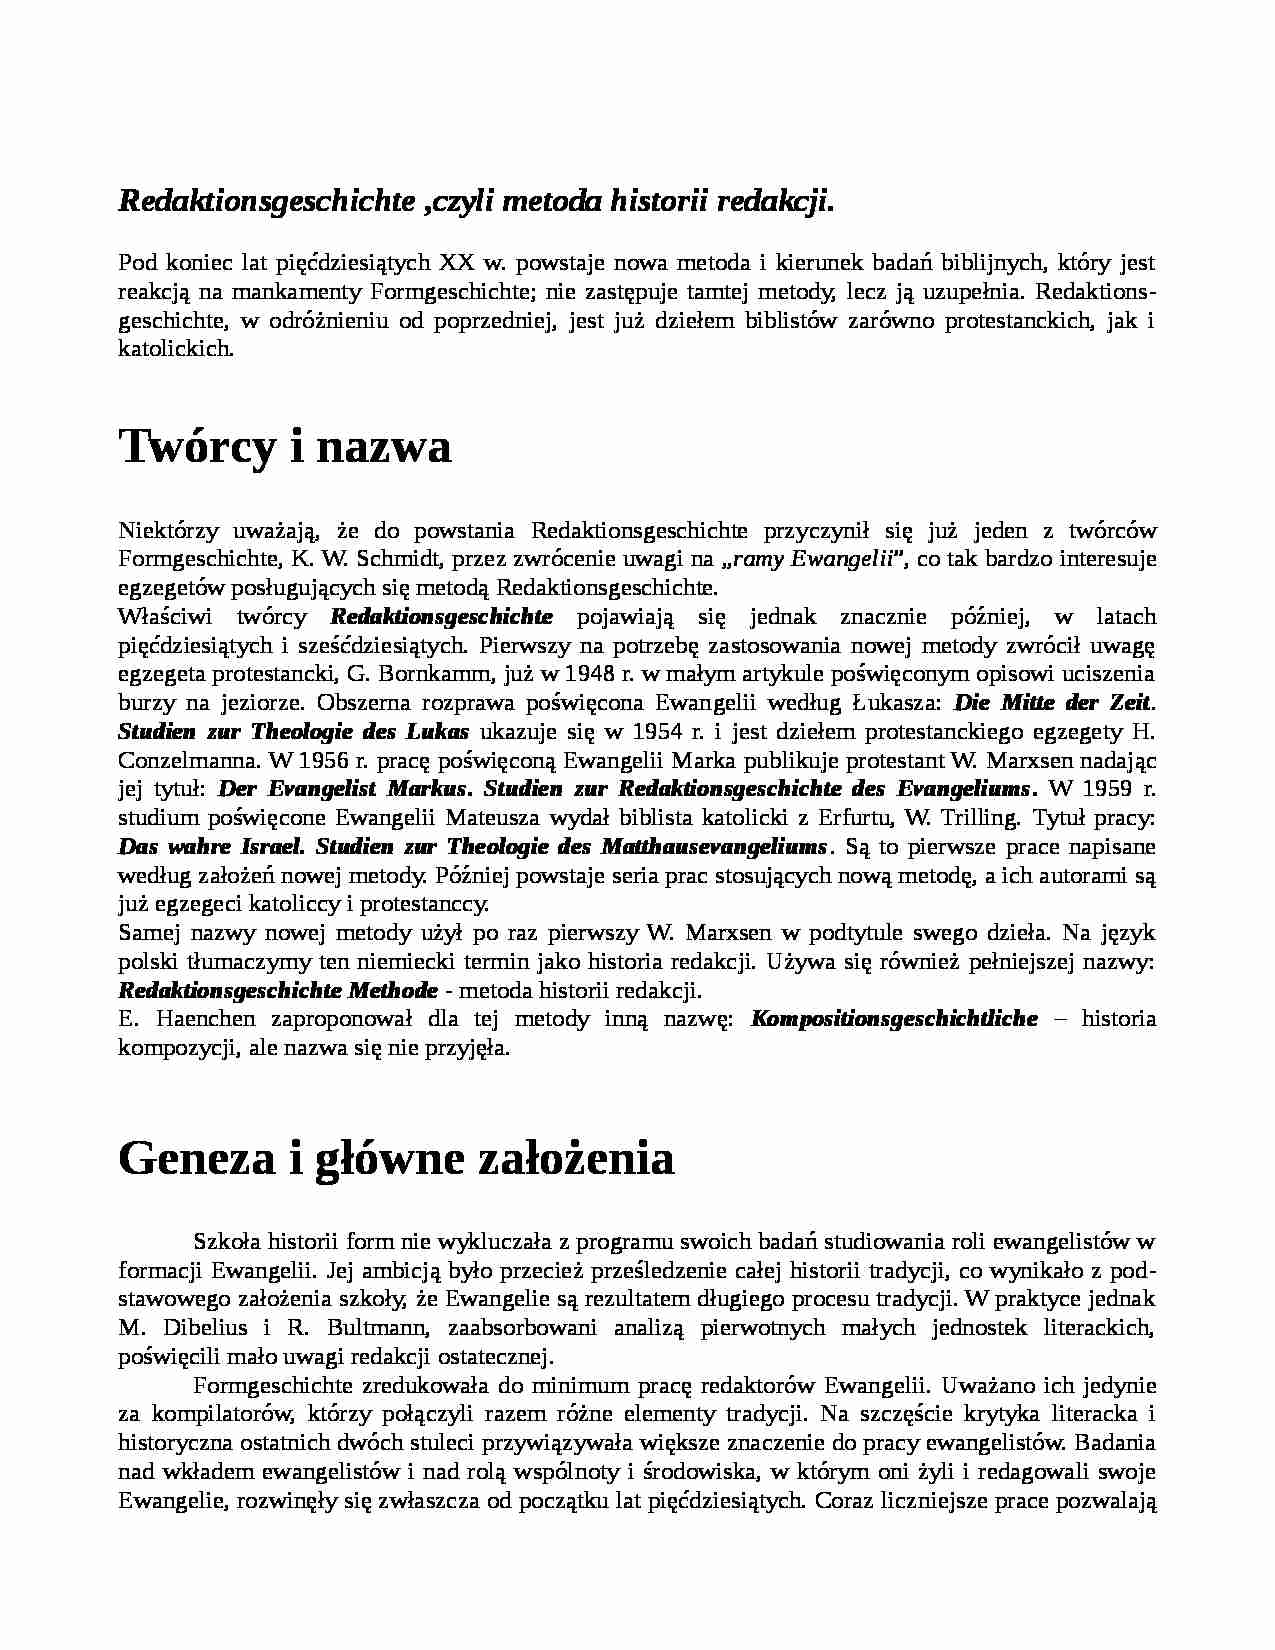 Redaktionsgeschichte, czyli metoda historii redakcji - strona 1